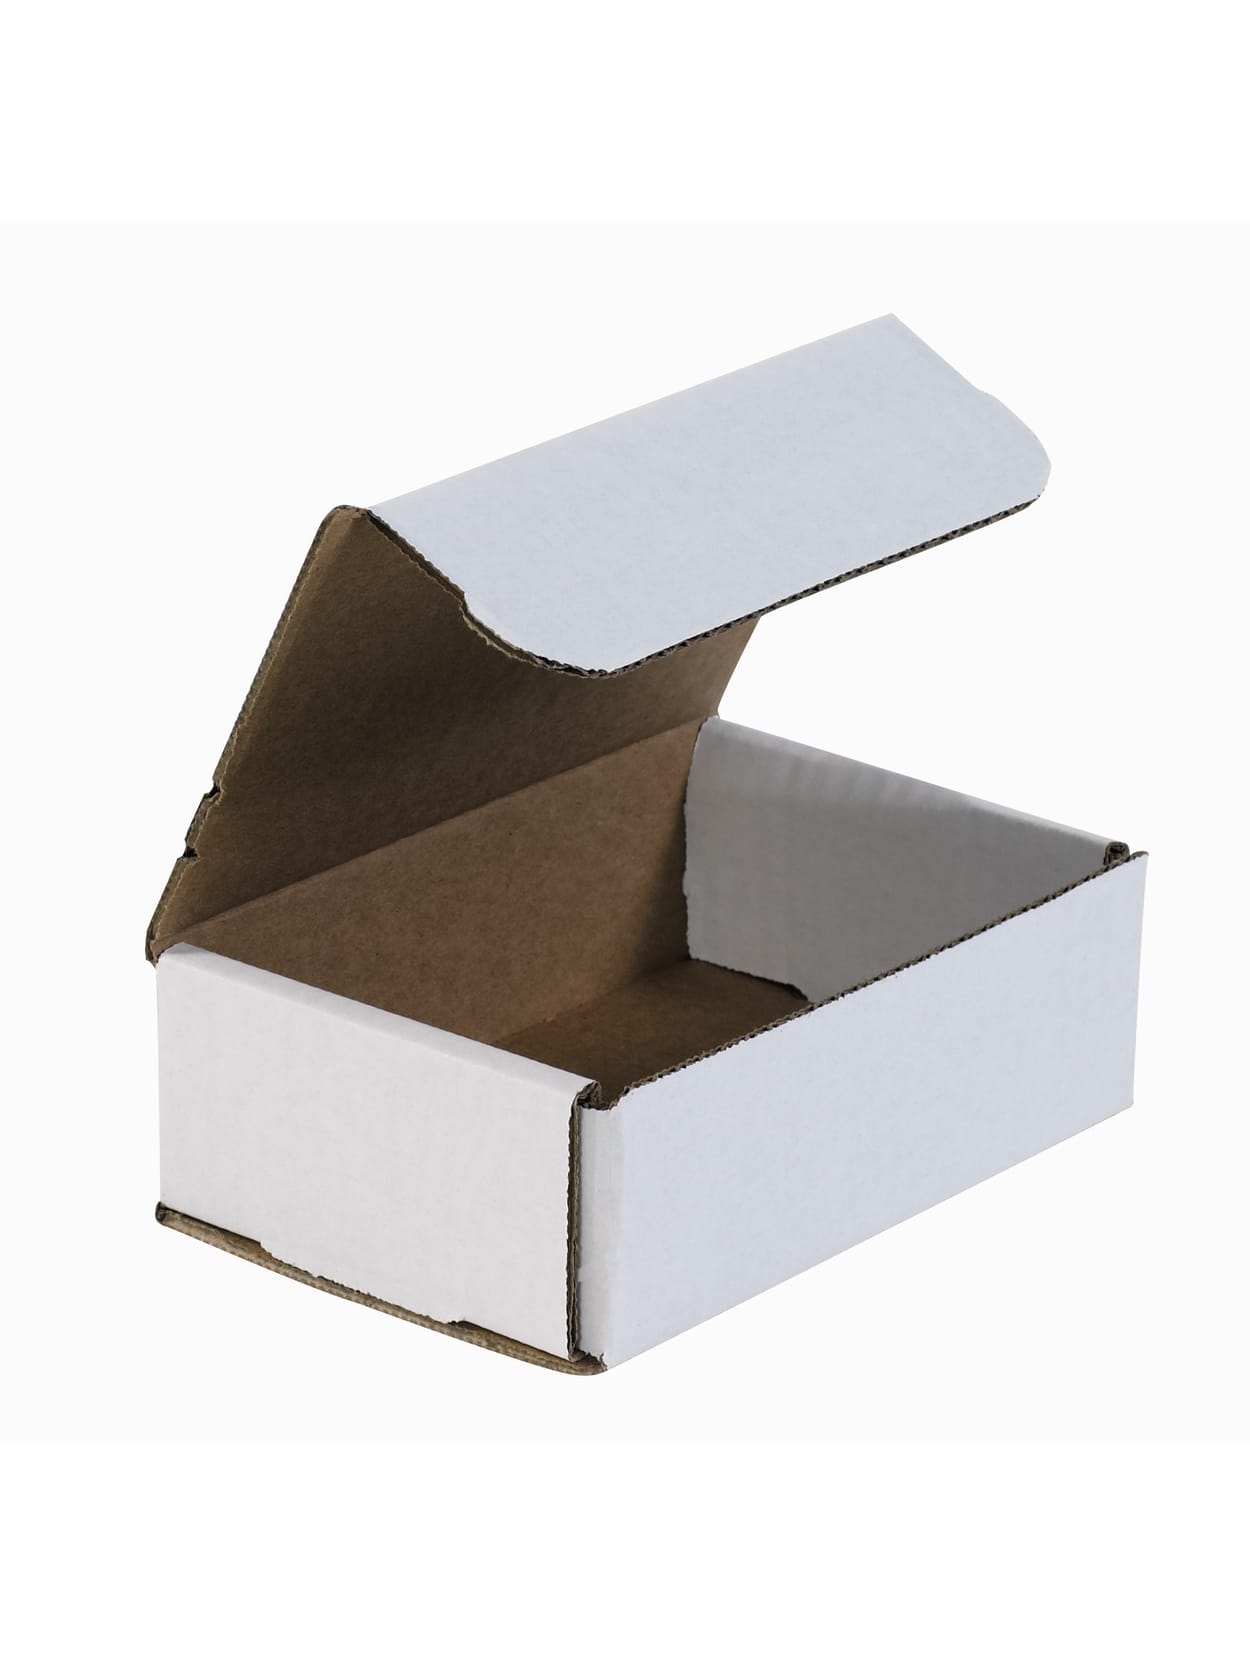 50 Pack Corrugated Literature Mailers 6 x 6 x 1-1//4 Premium White Box Carton